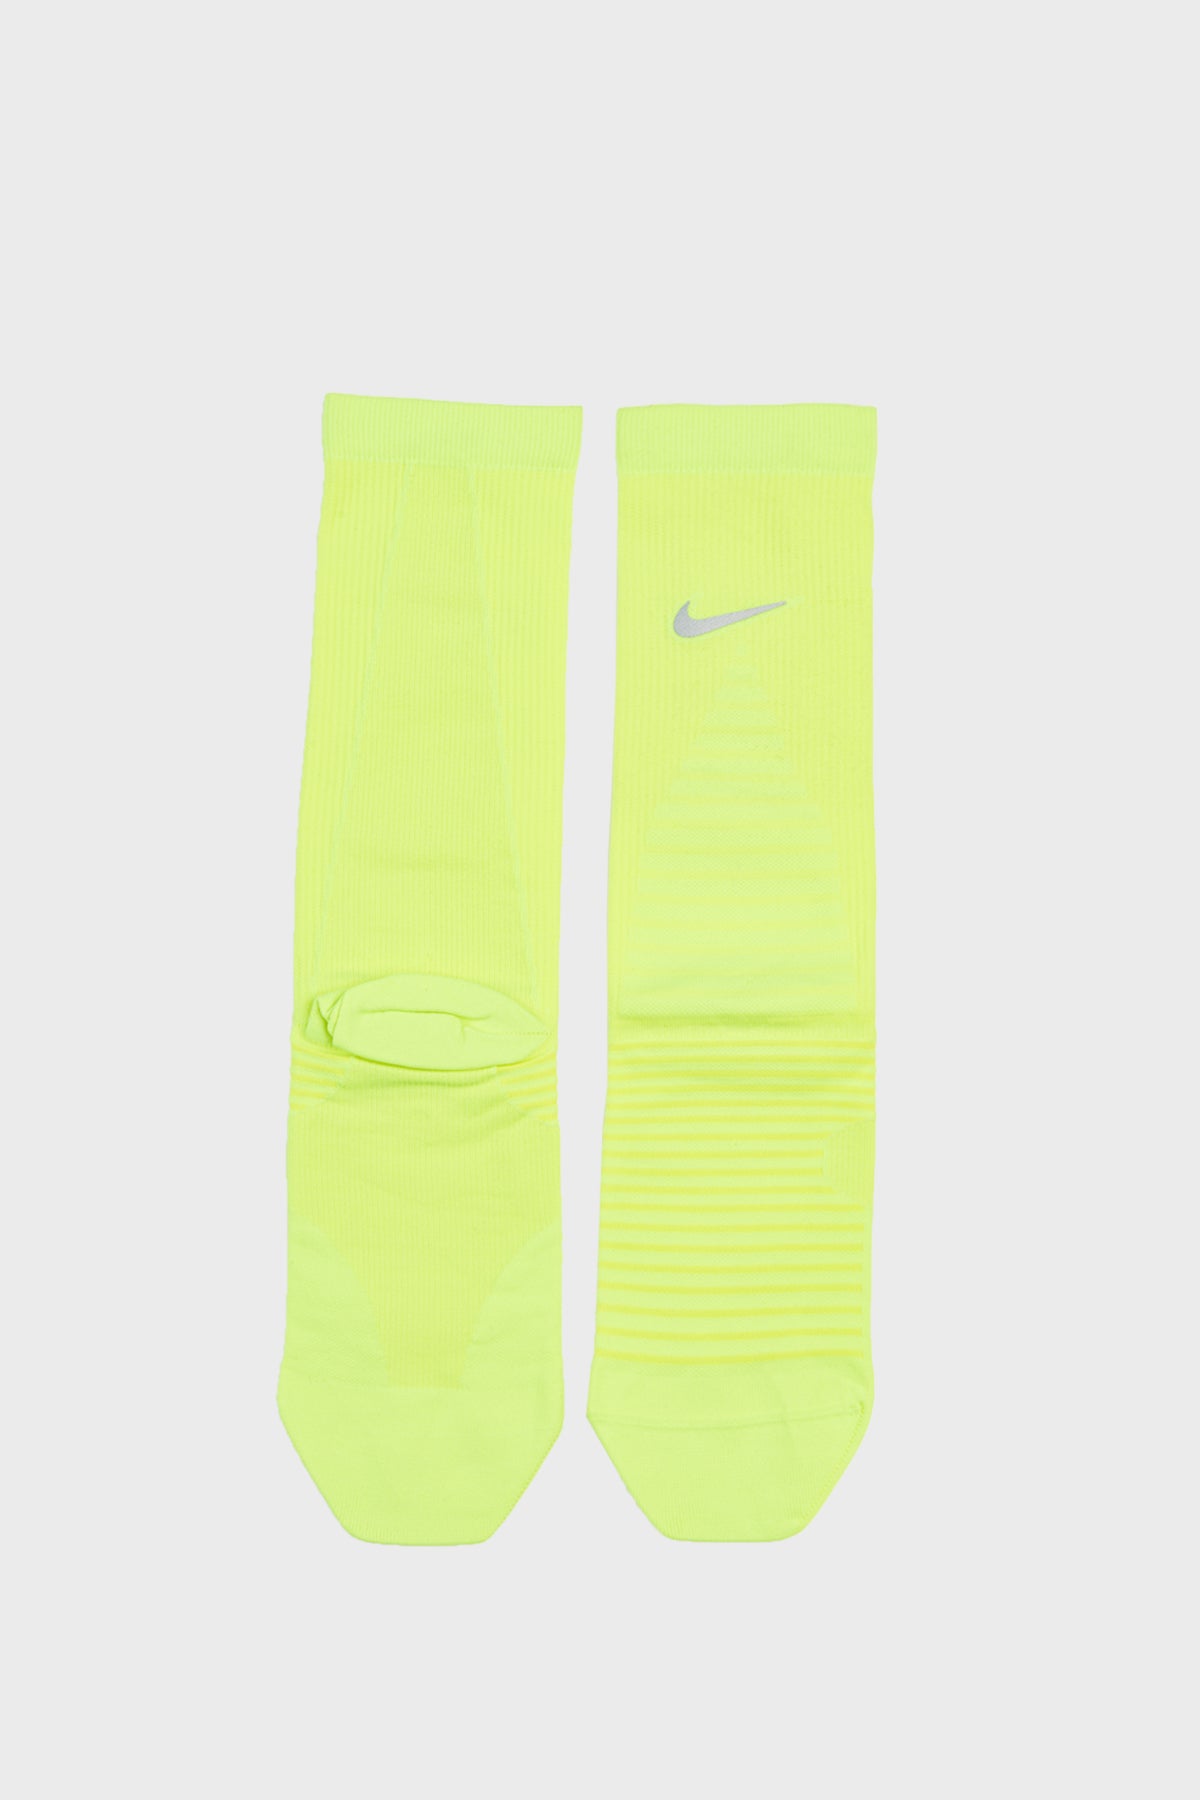 Nike - Spark Lightweight socks